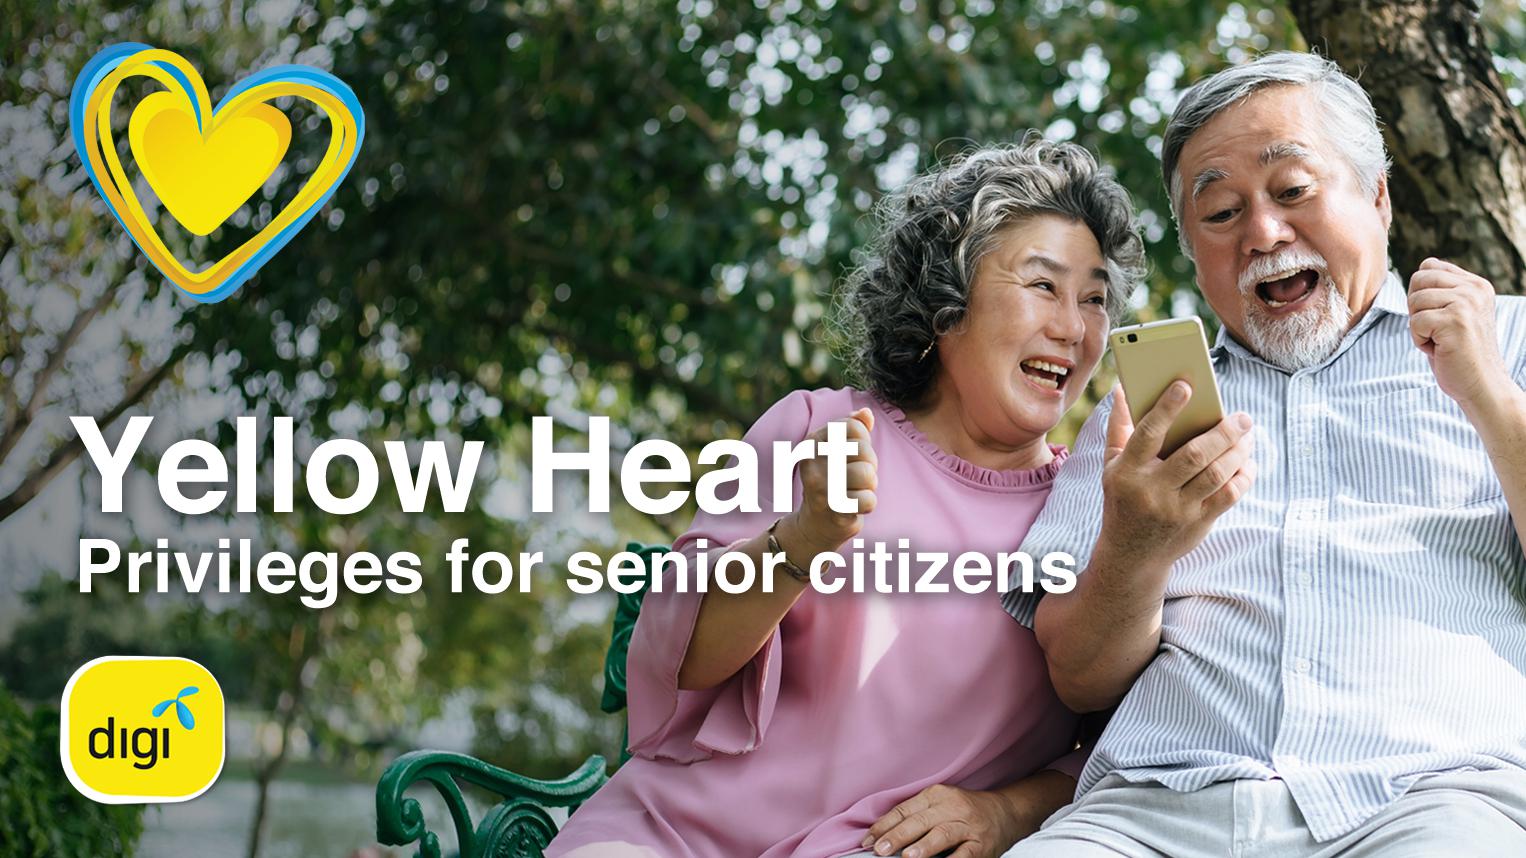 digi-offers-myr10-lifetime-rebate-for-senior-citizens